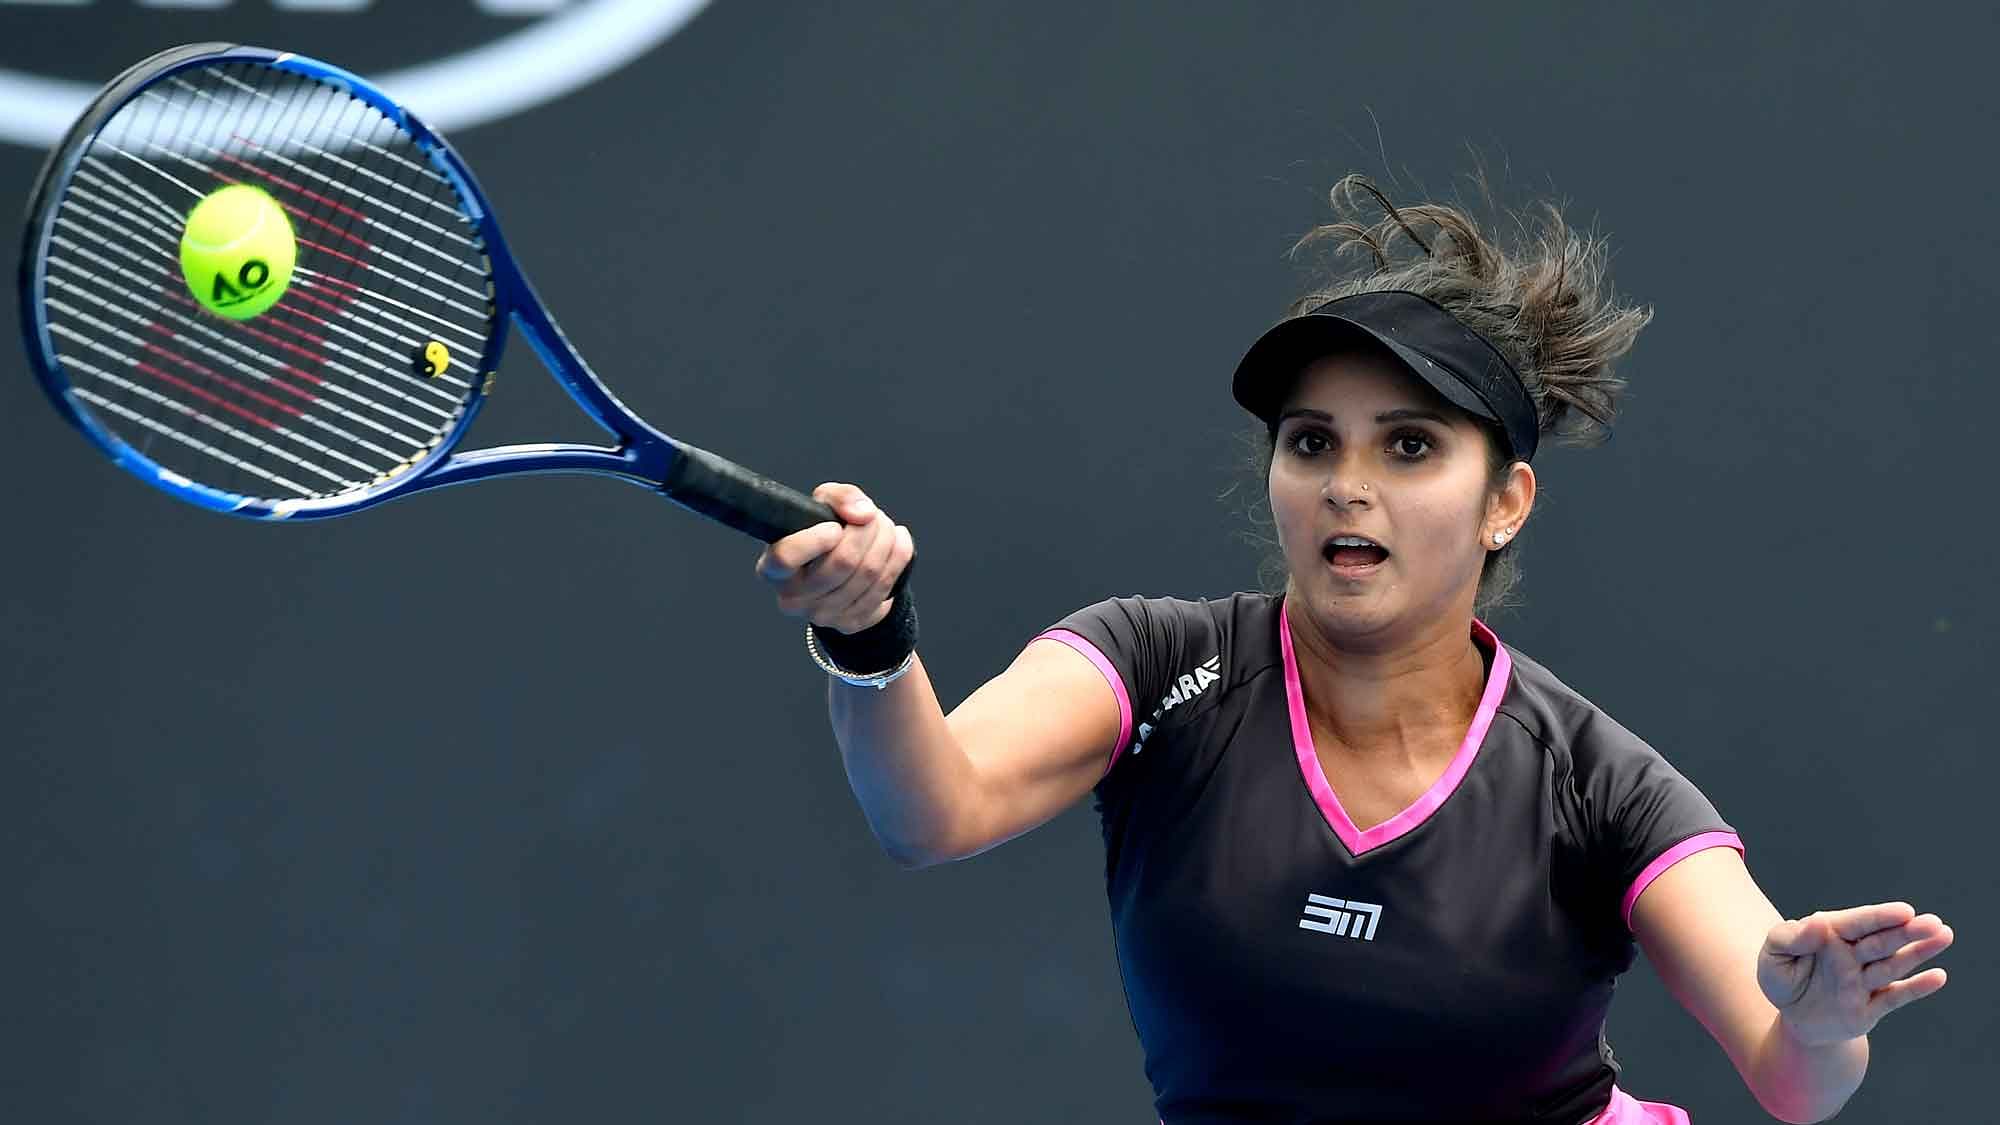 Sania Mirza in action during the Australian Open. (Photo: AP)